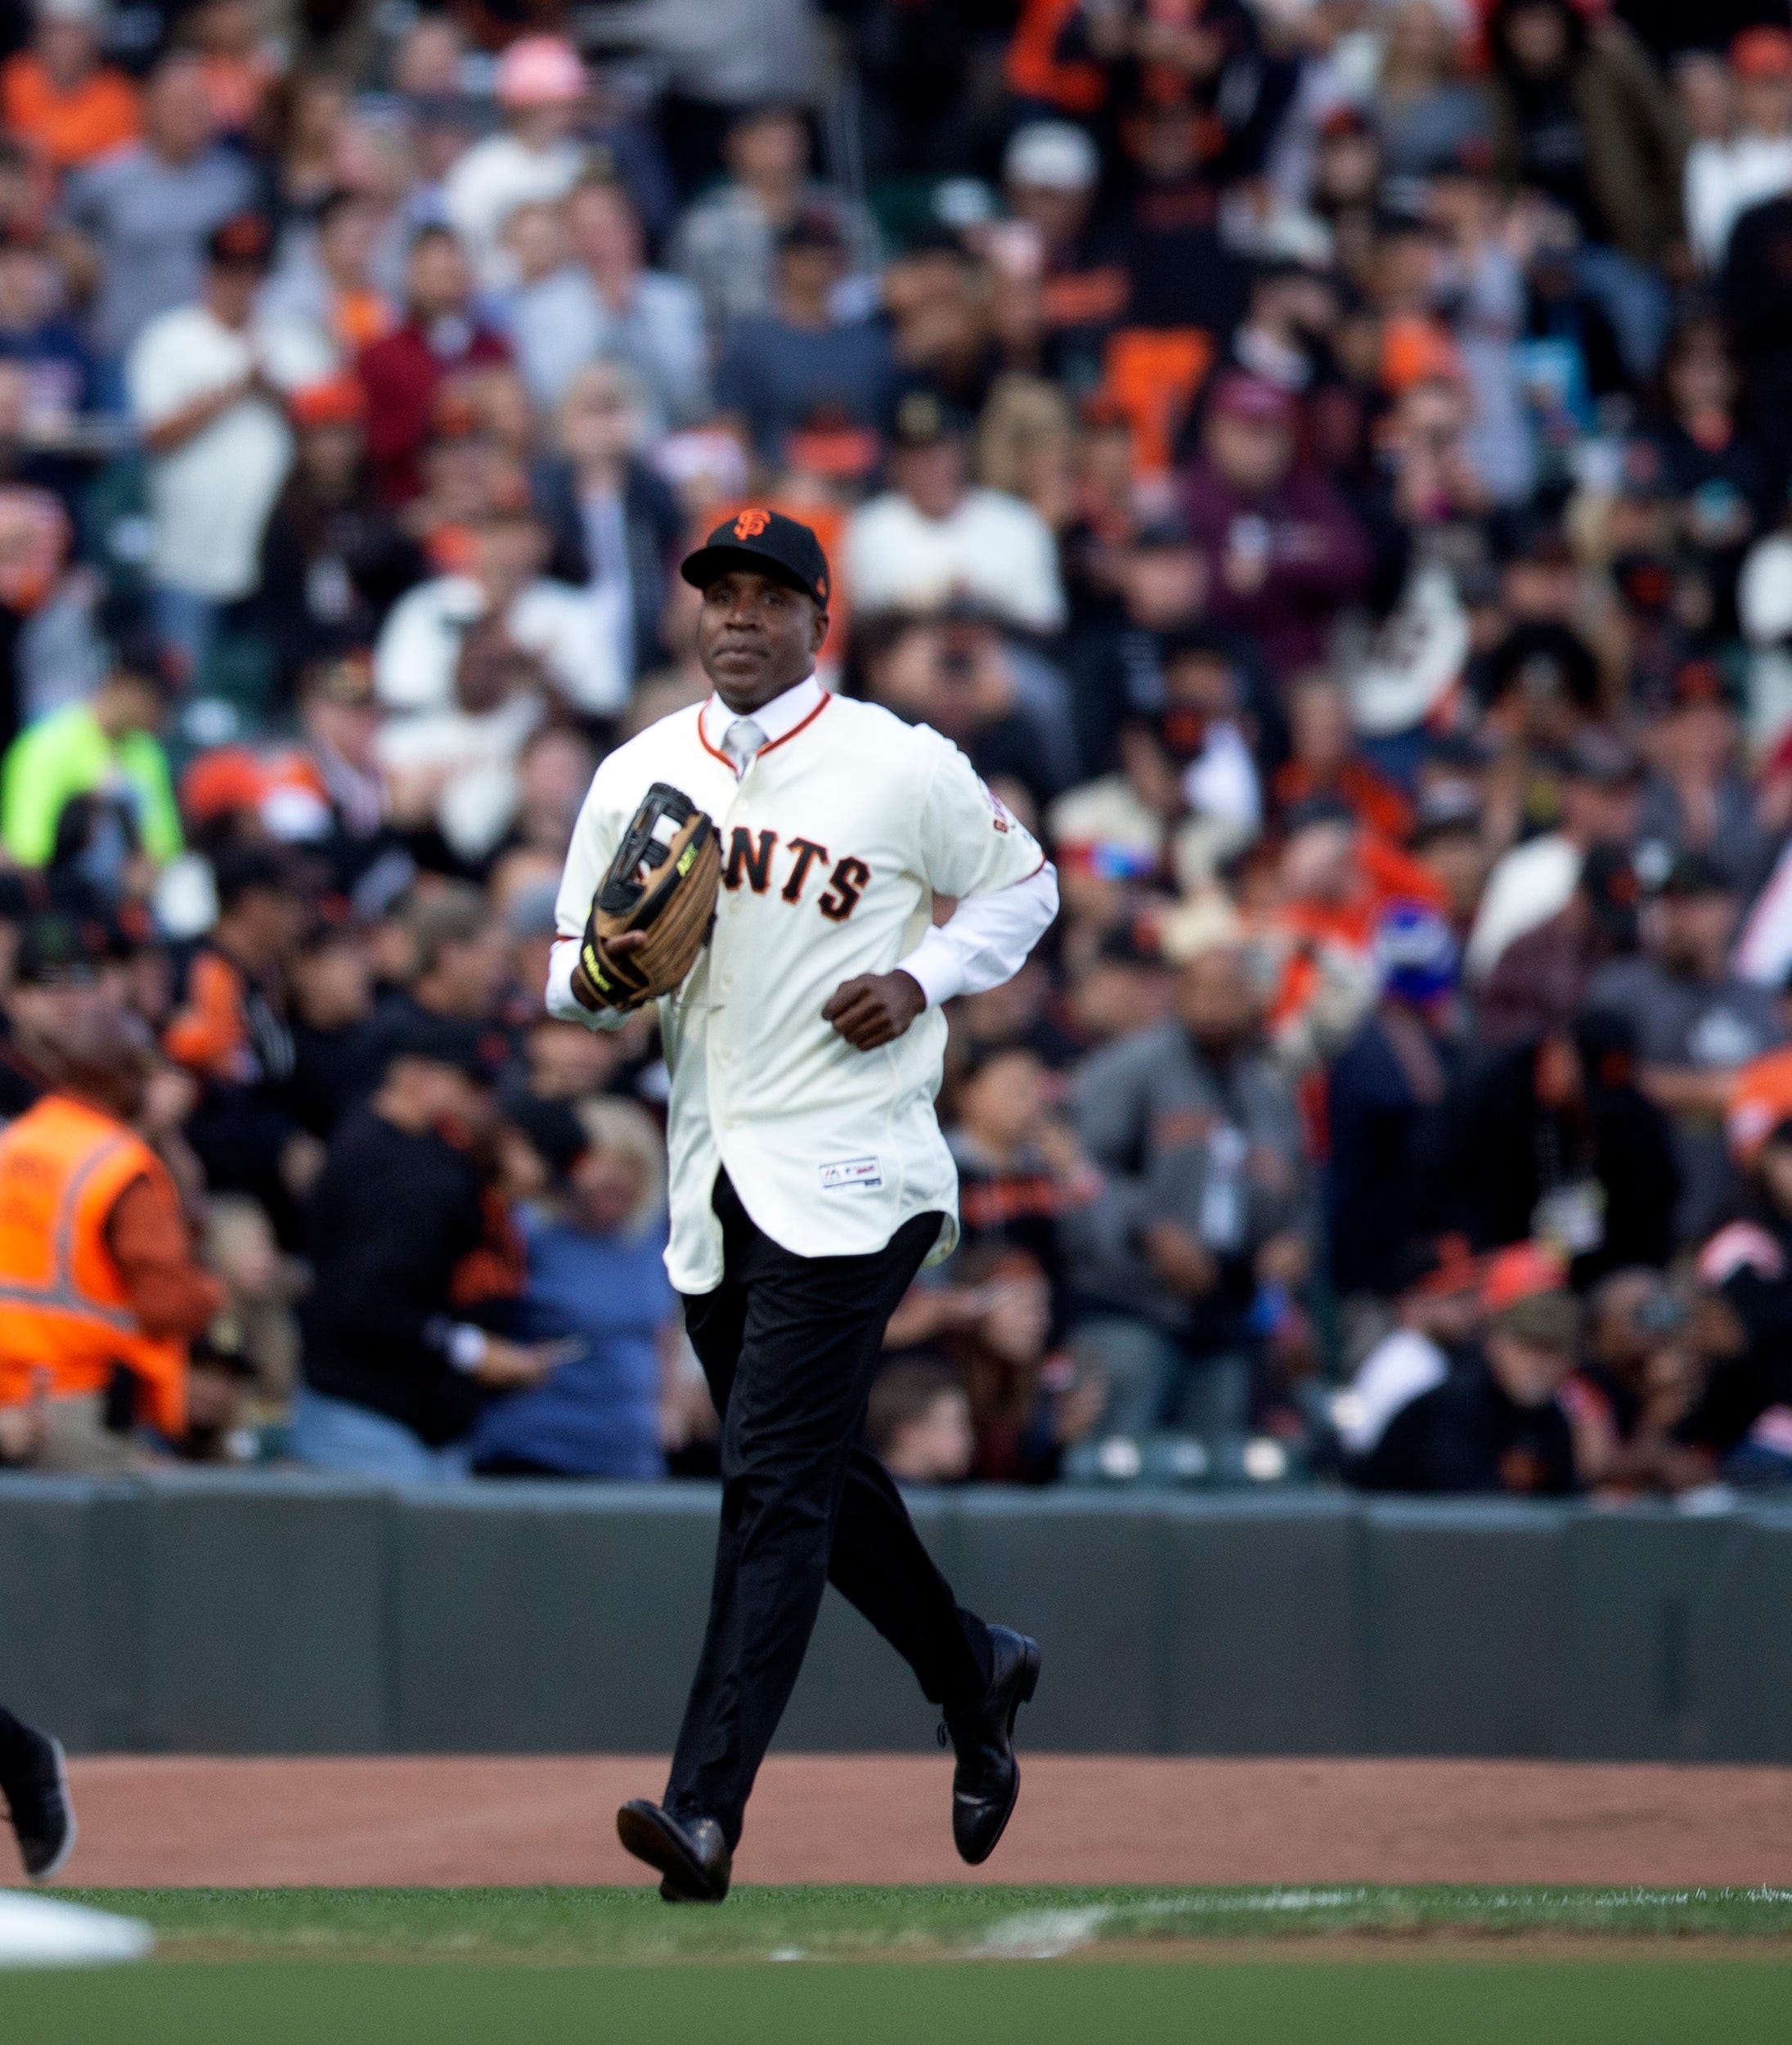 Men's Majestic #25 Barry Bonds Authentic Fashion MLB MLB Jersey - San  Francisco Giants